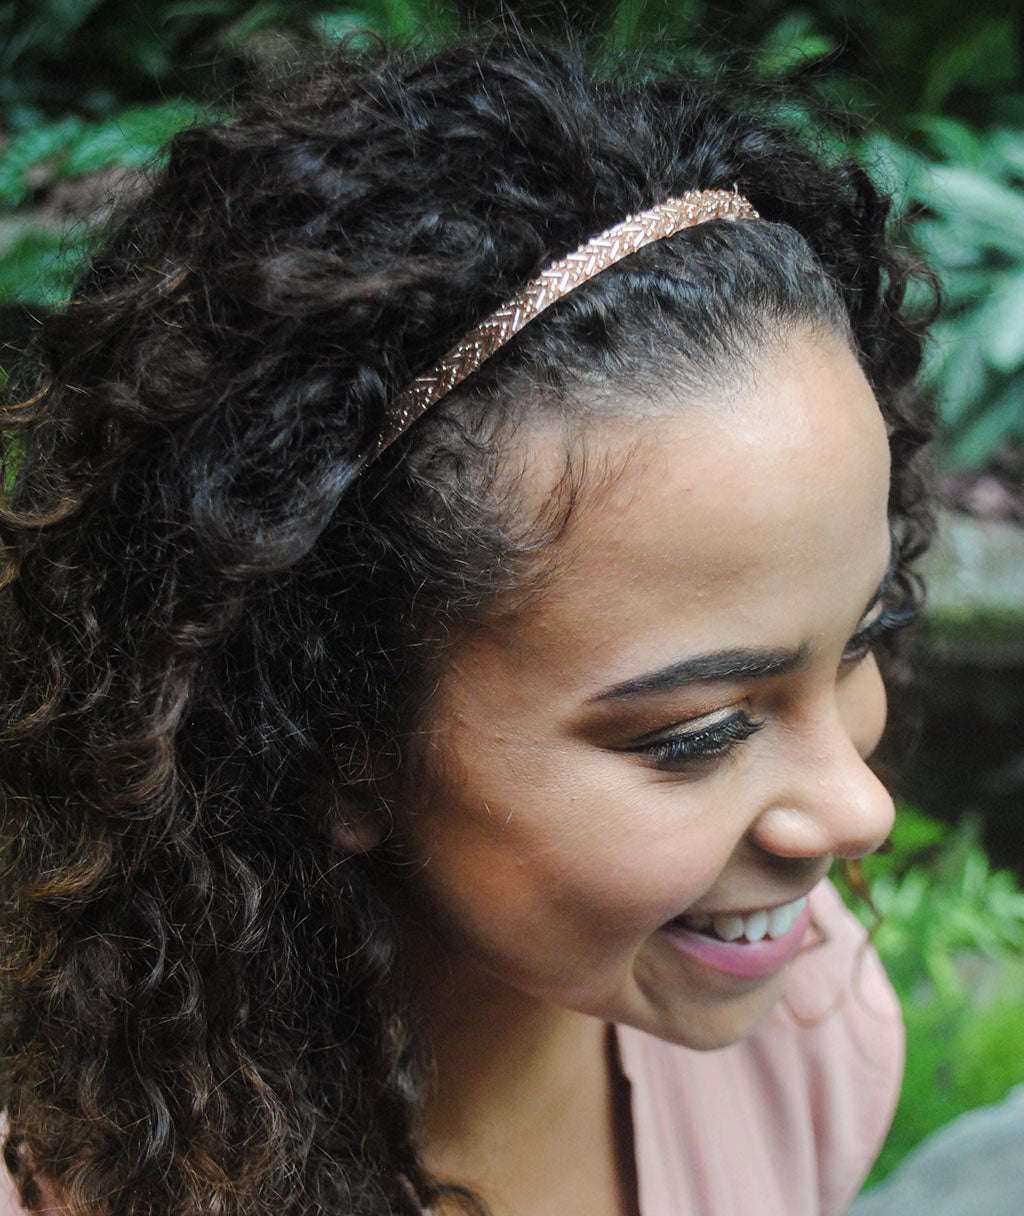 BANDED Women’s Premium Headbands + Hair Accessories - Blushing Beauty - Luxe Headband